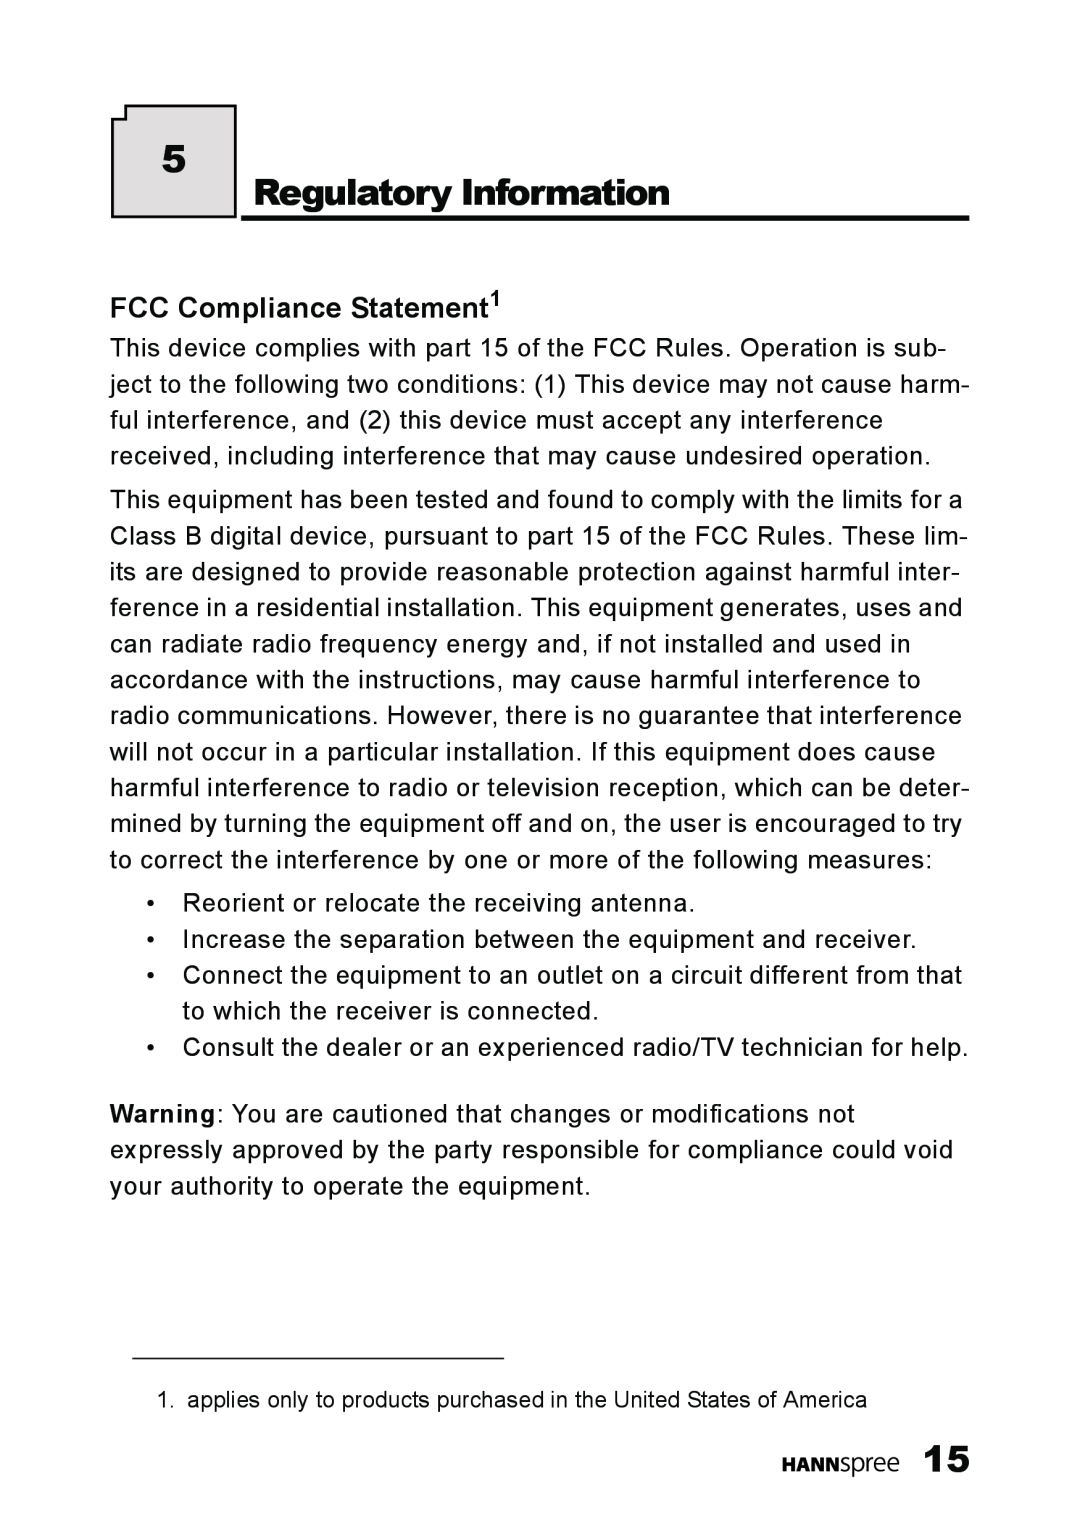 HANNspree LT11-23A1 user manual Regulatory Information, FCC Compliance Statement1 